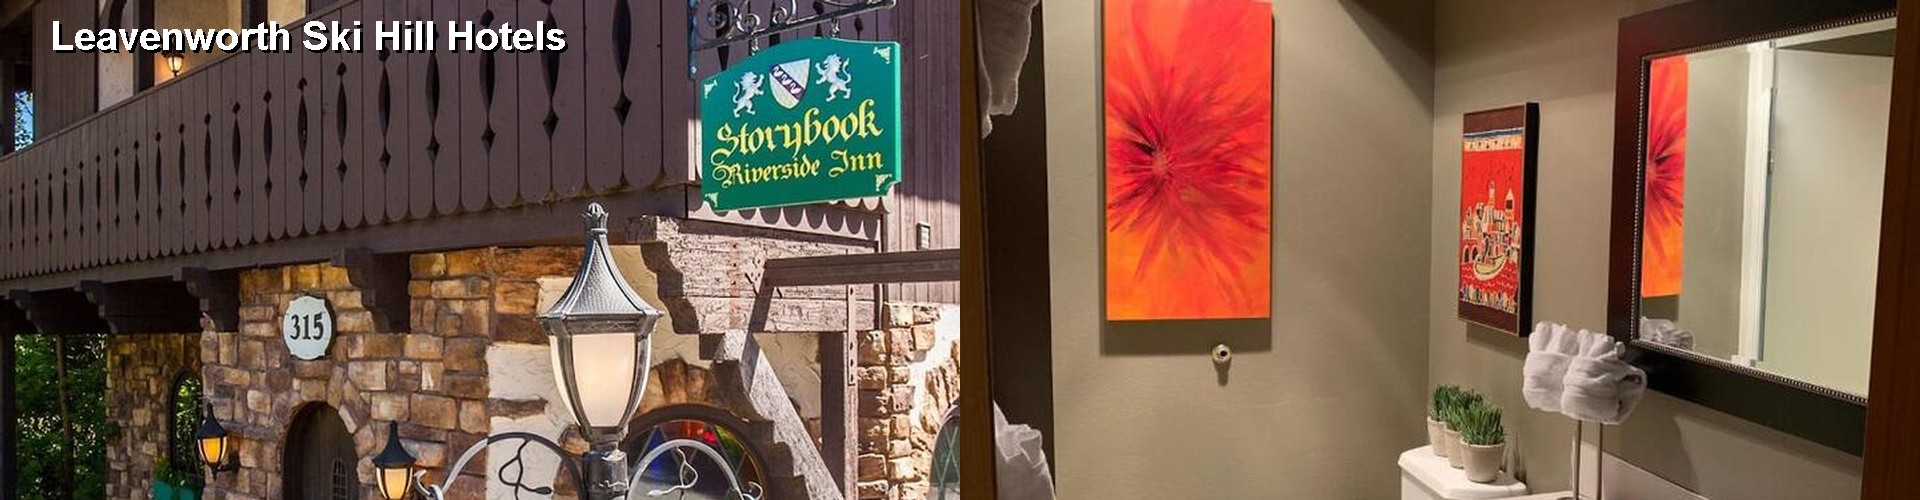 5 Best Hotels near Leavenworth Ski Hill